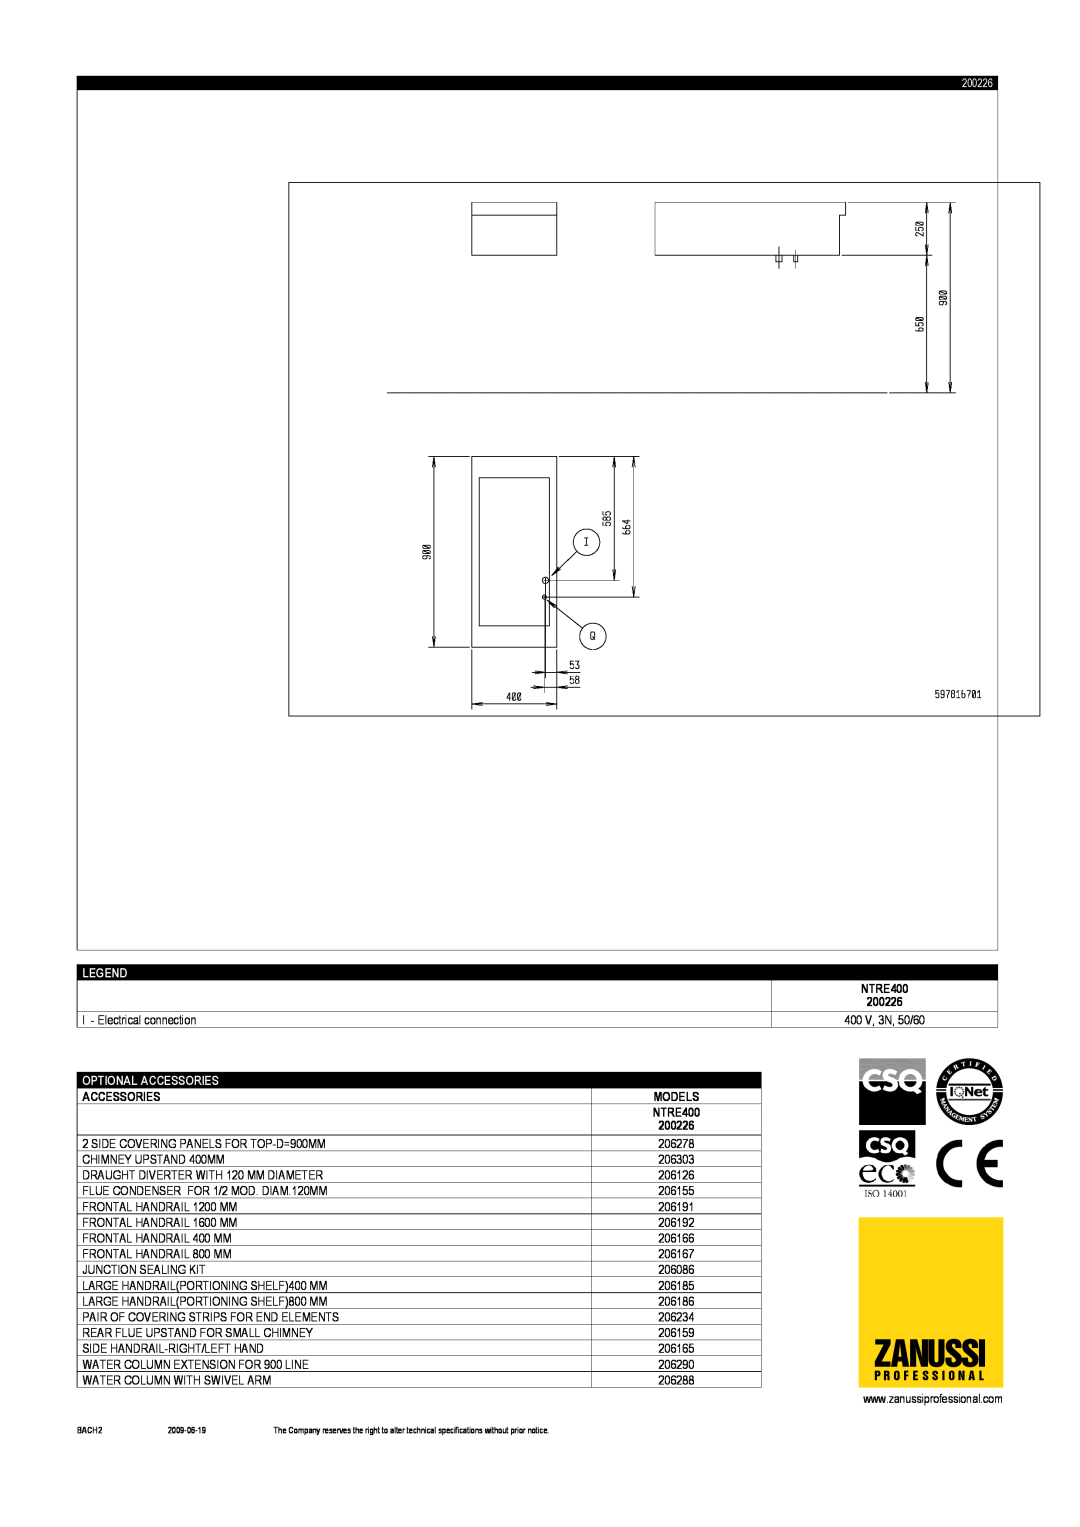 Zanussi NTRE400, 200226 dimensions Zanussi, Optional Accessories, Models 